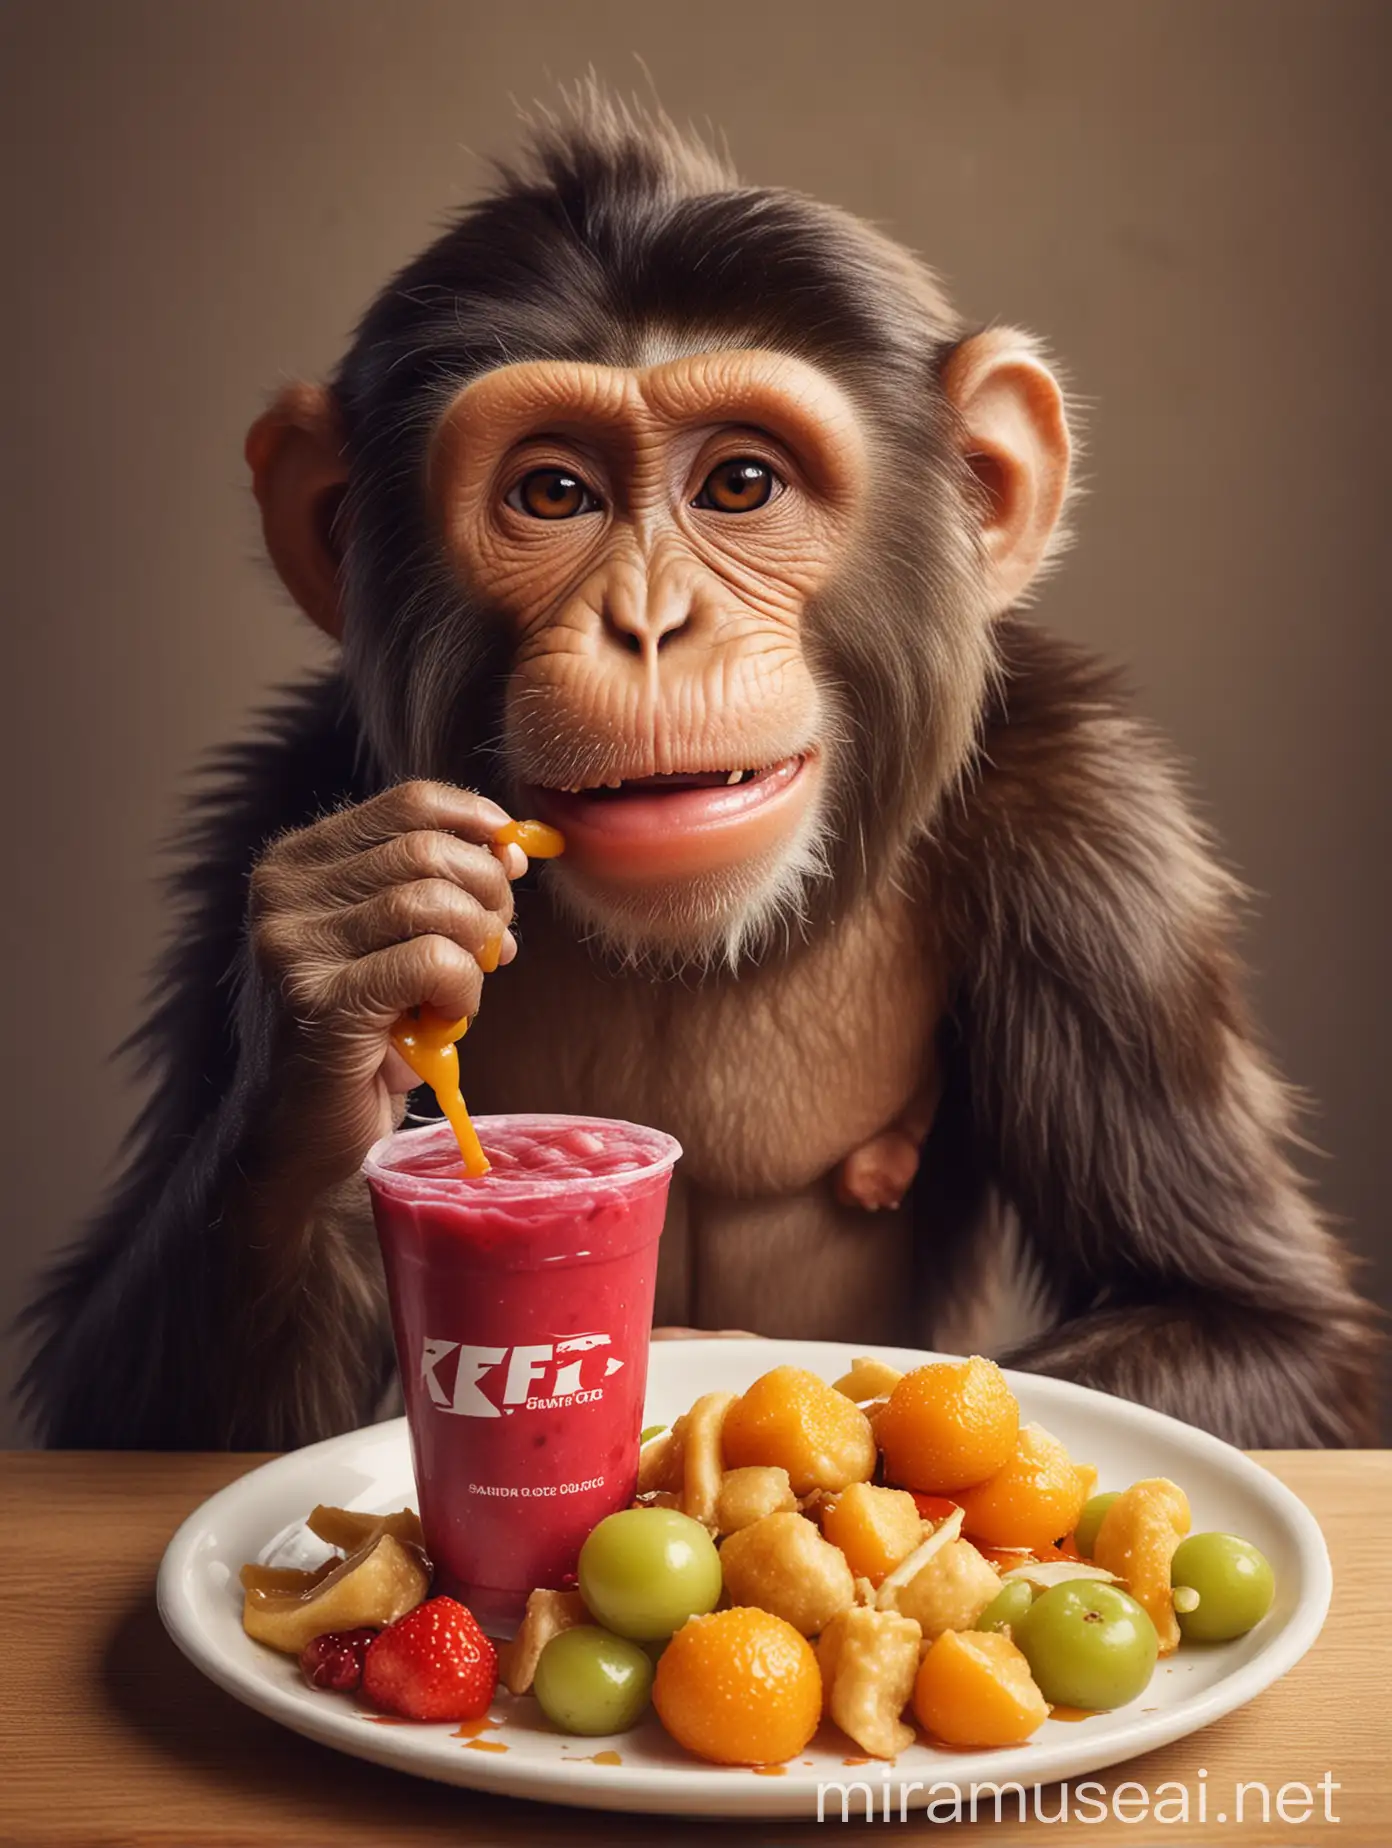 make me a monkey eating kfc with grape fruit punch
